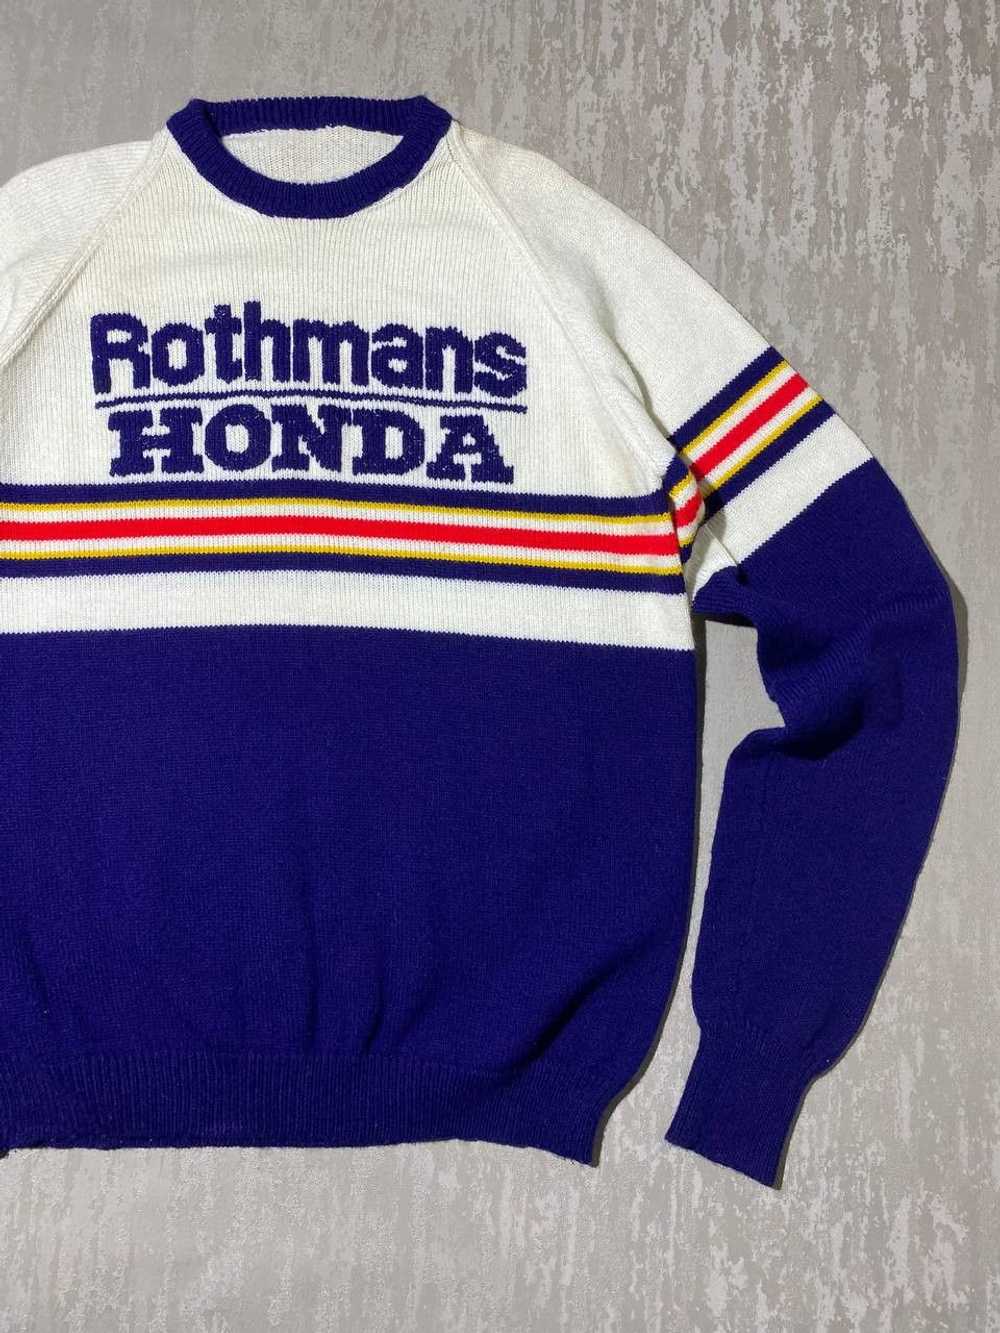 Honda × Racing × Vintage 80s RARE Vintage Knit Sw… - image 3